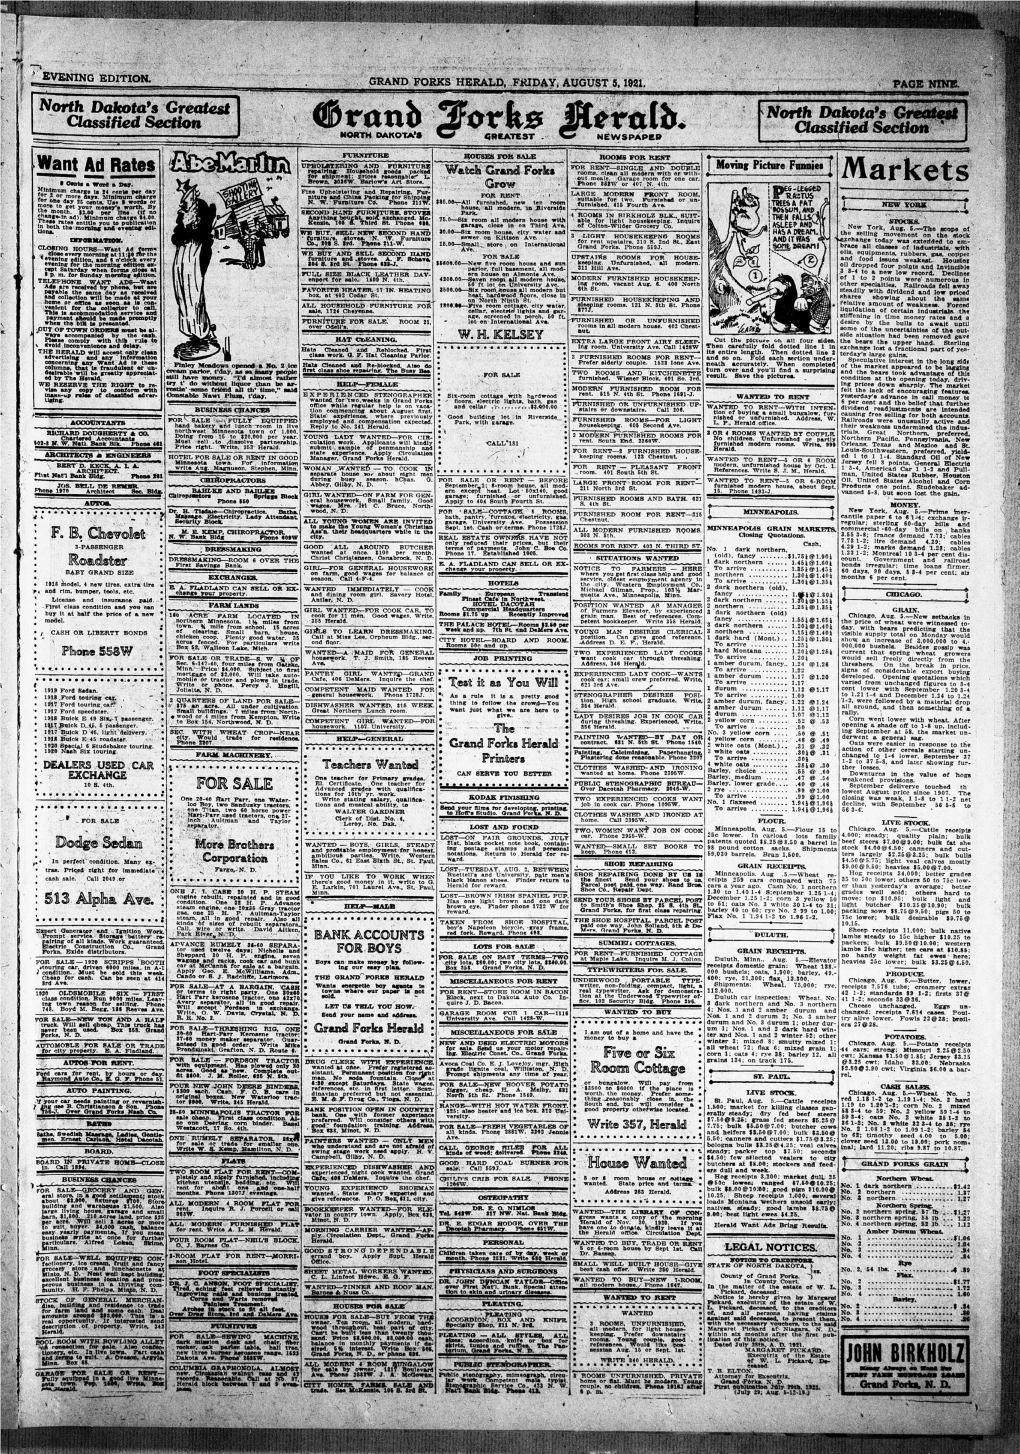 GRAND FORKS HERALD, Fkipayj AUGUST 5,1921